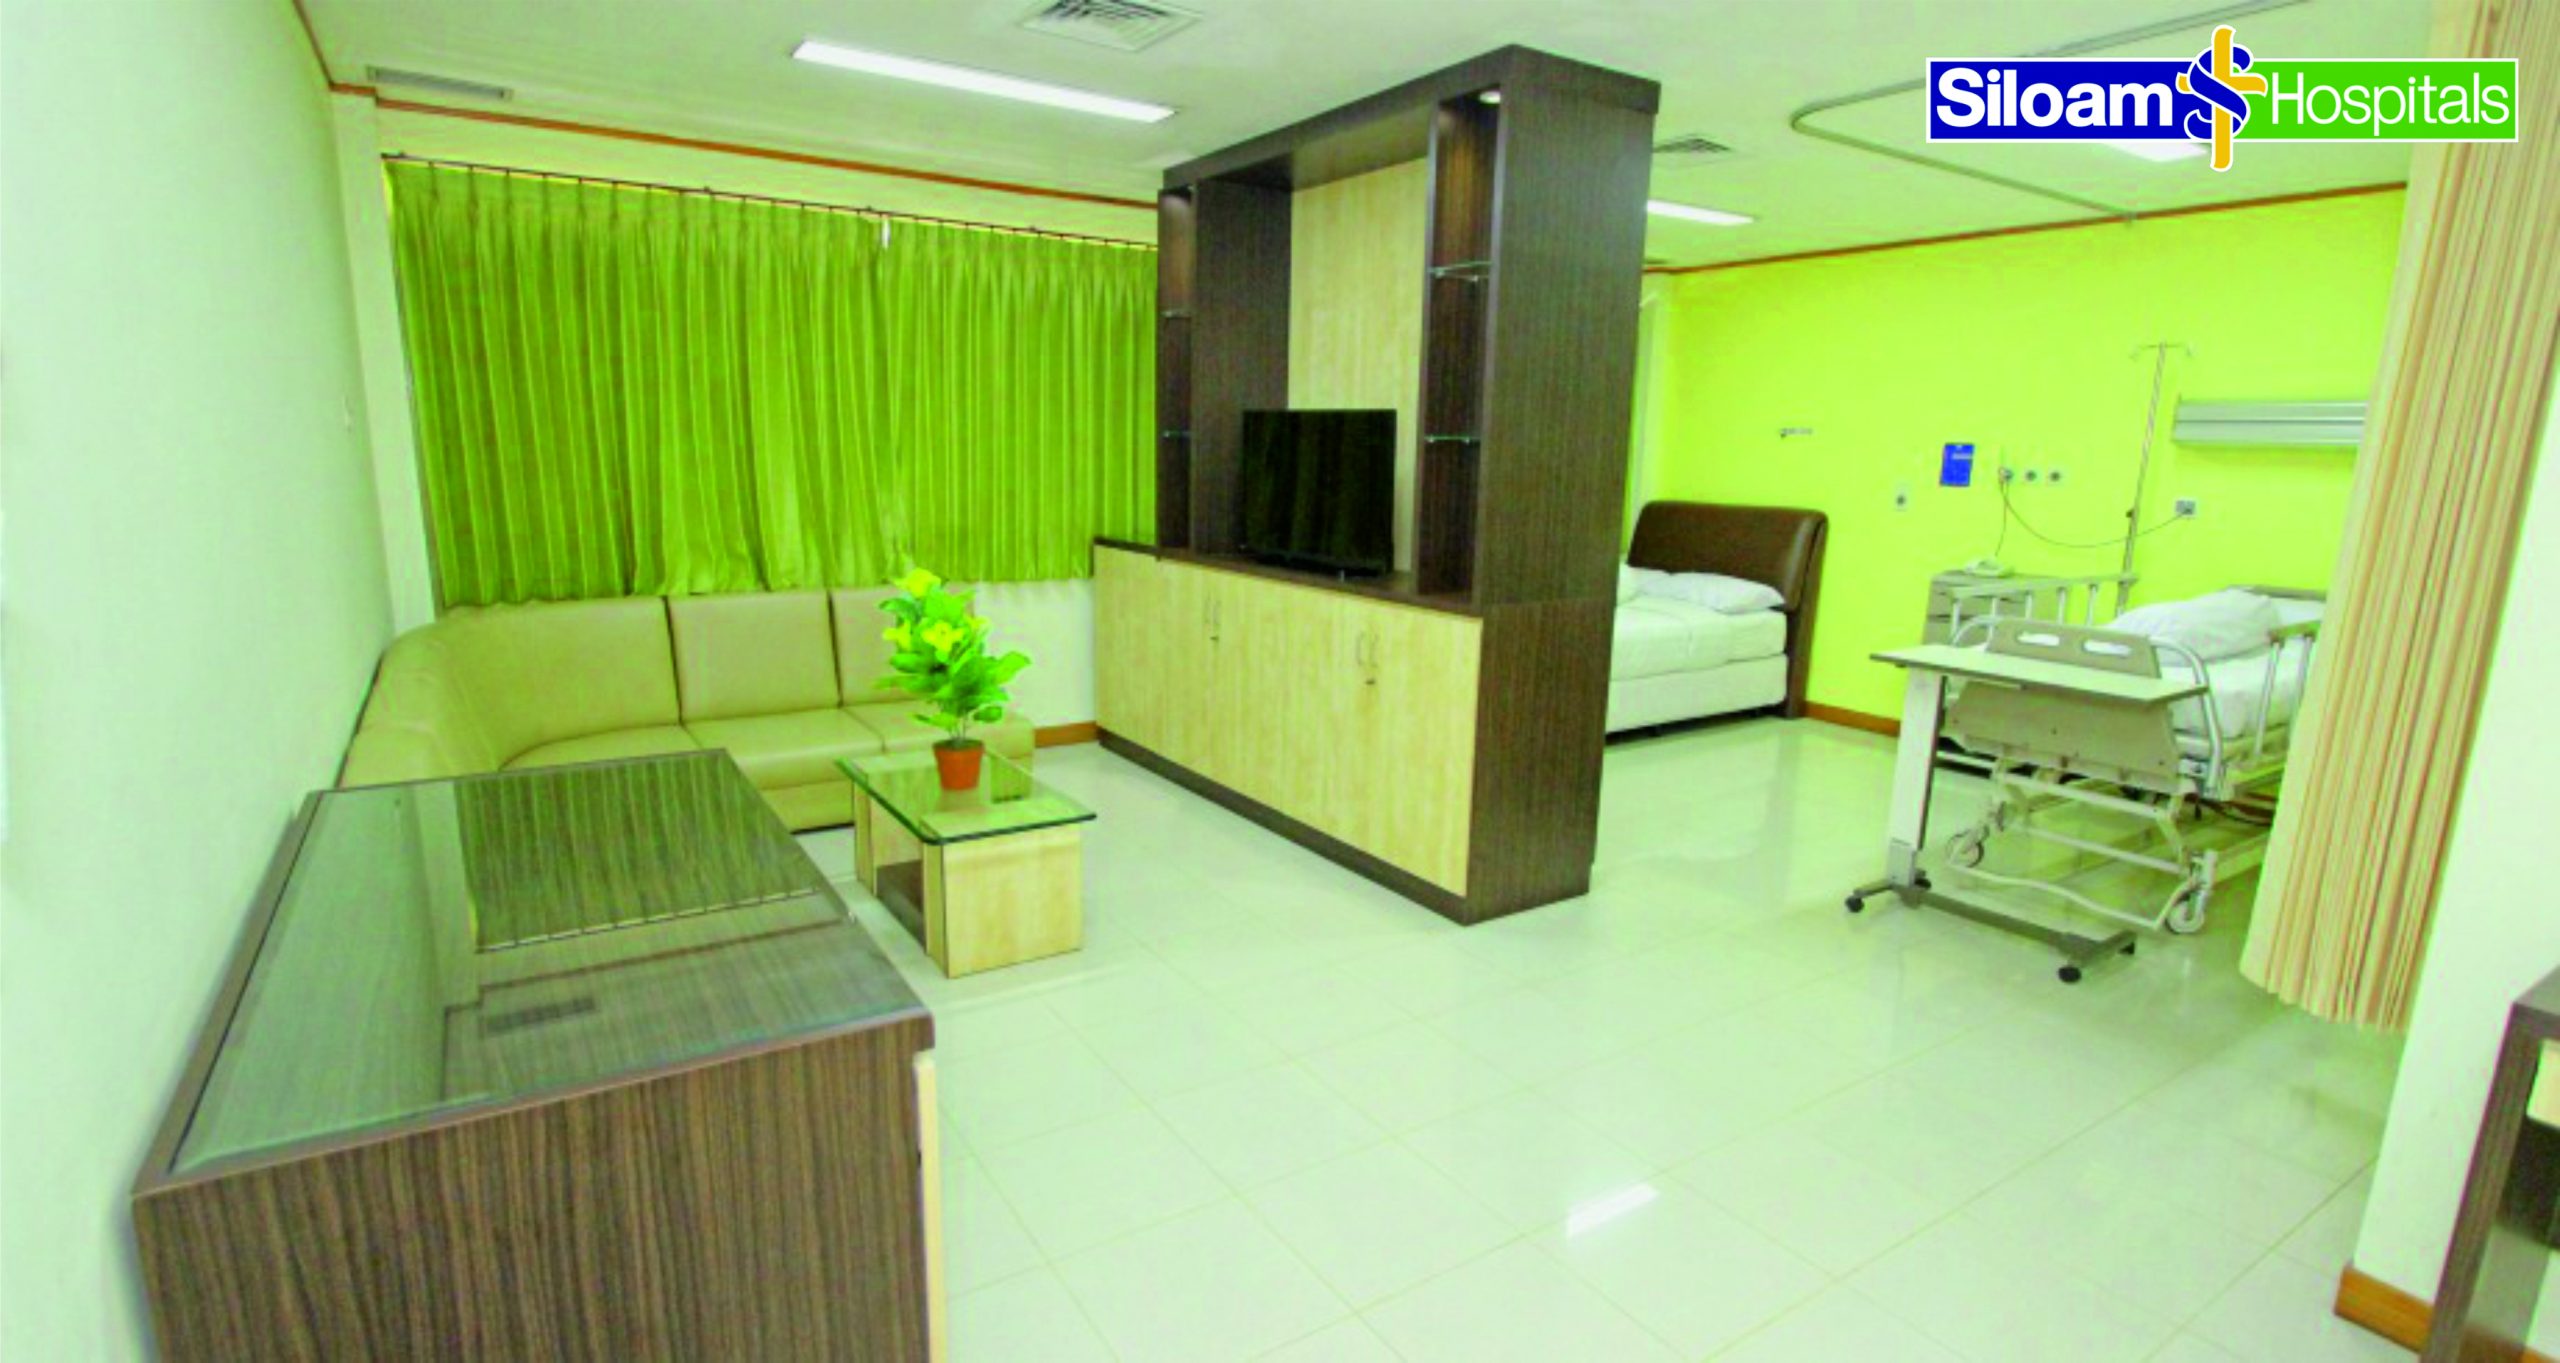 Siloam Hospitals Surabaya Indonesia Medical Tourism Indonesia Healthcare Travel Industry